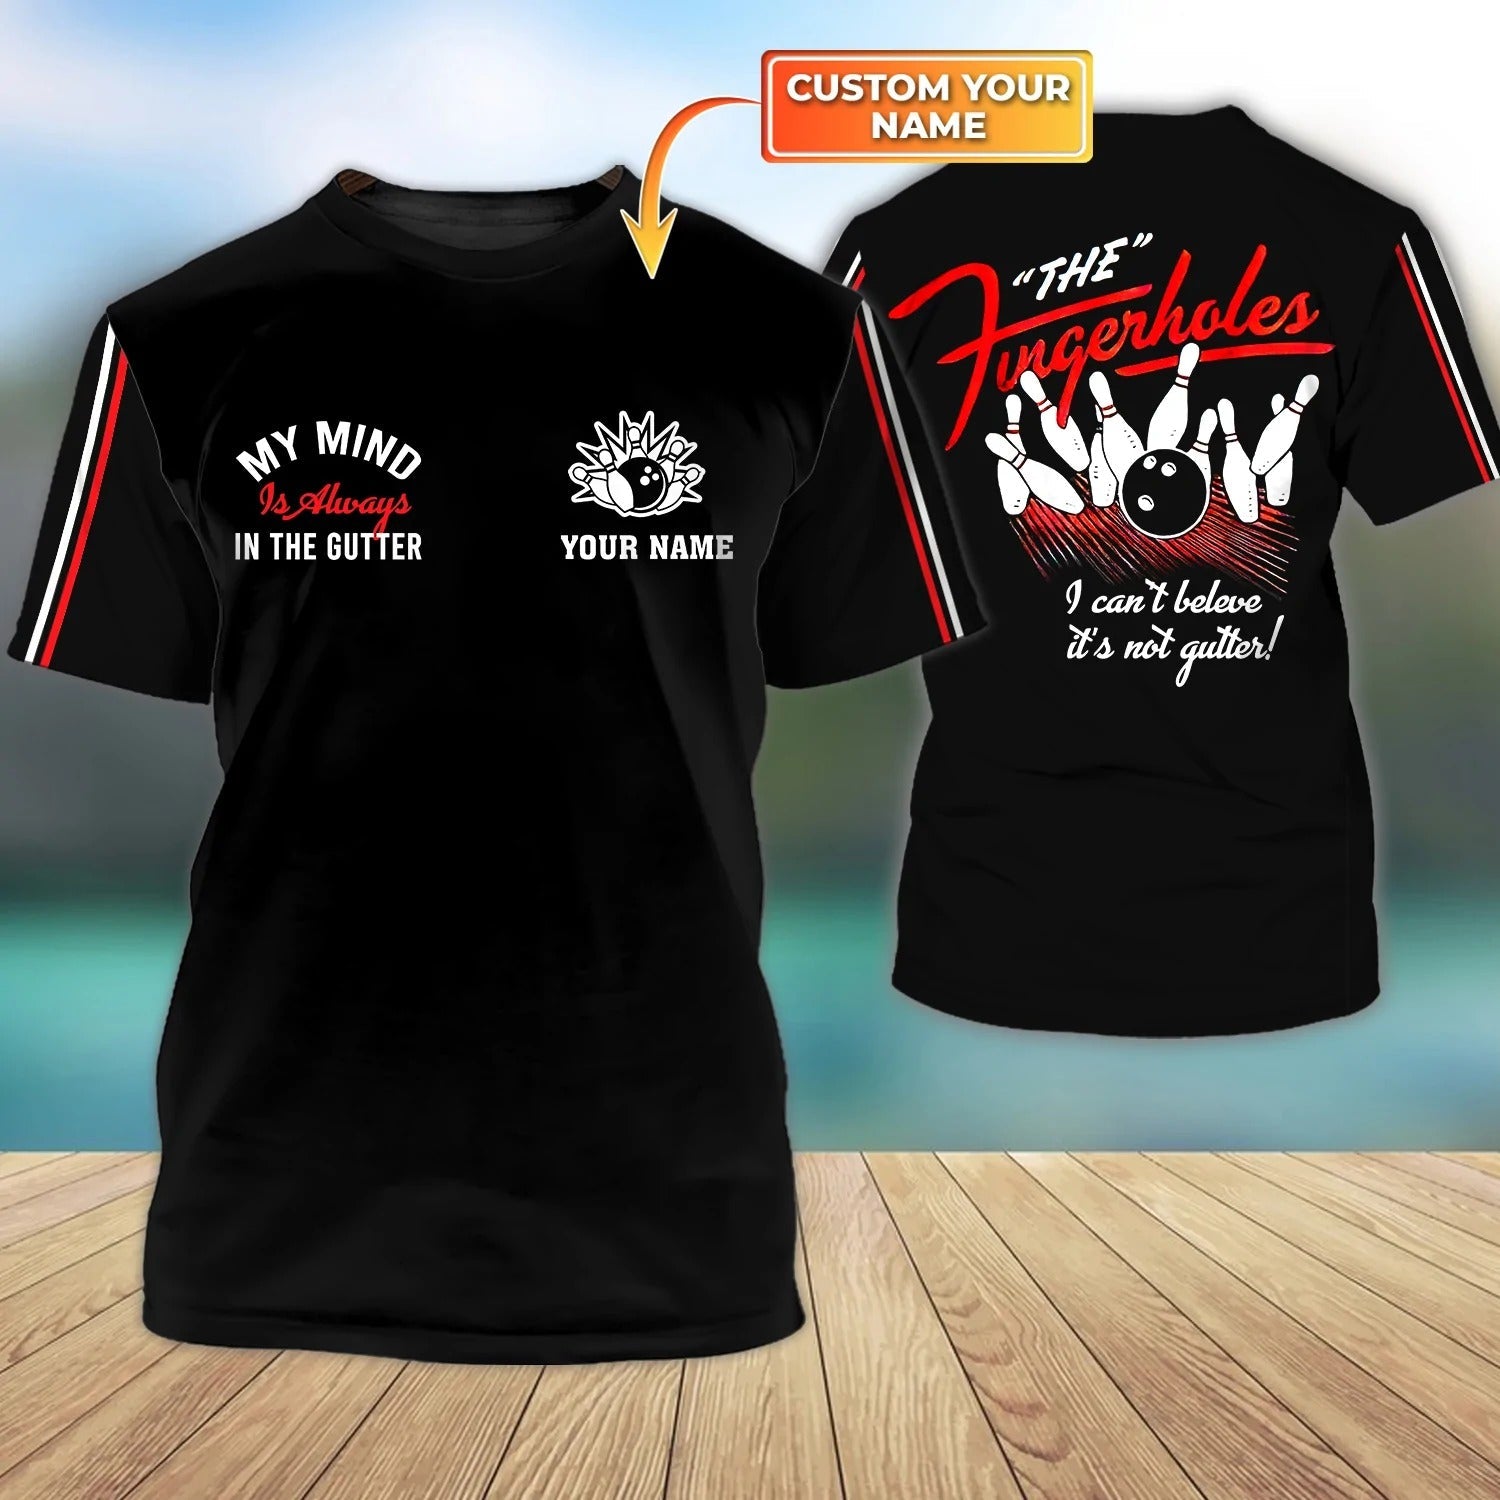 Custom Name Black T Shirt For Bowling Player/ My Mind In The Gutter/ Bowling Shirts Men Women